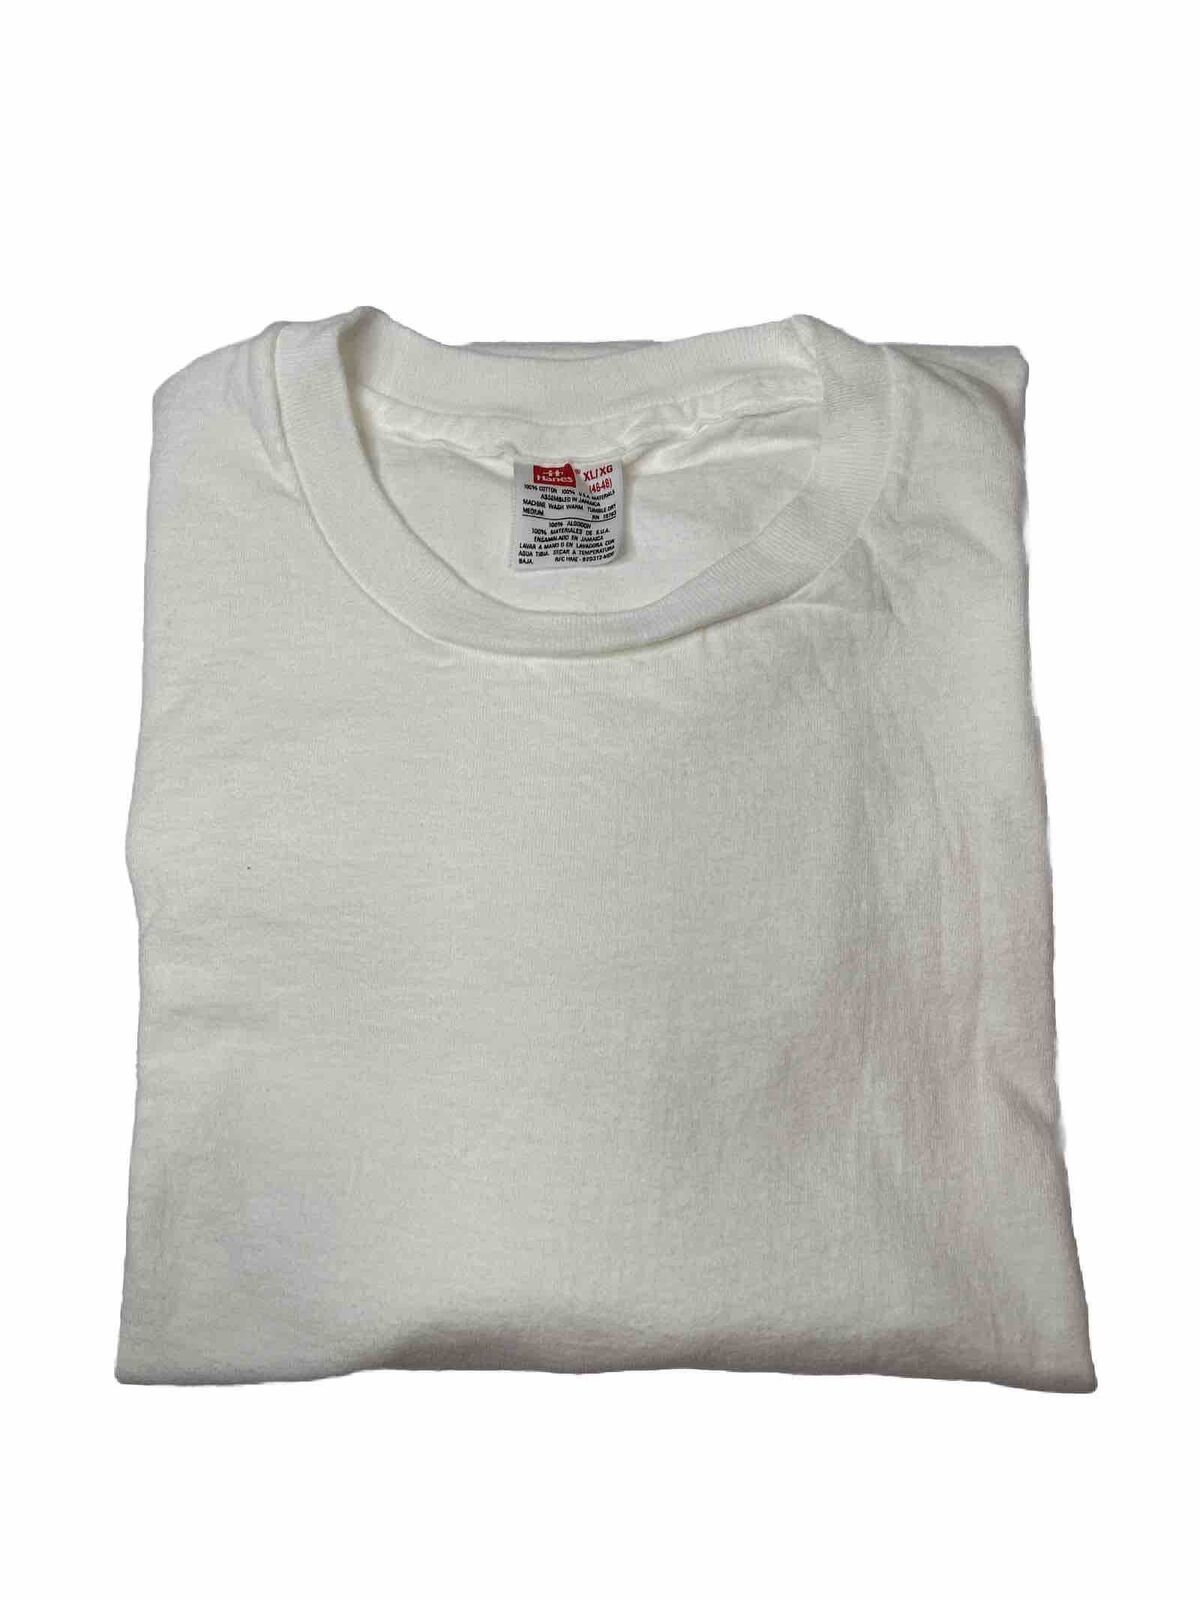 Vintage 1980’s Hanes Single Stitch Blank White T Shirt USA Men’s XL New